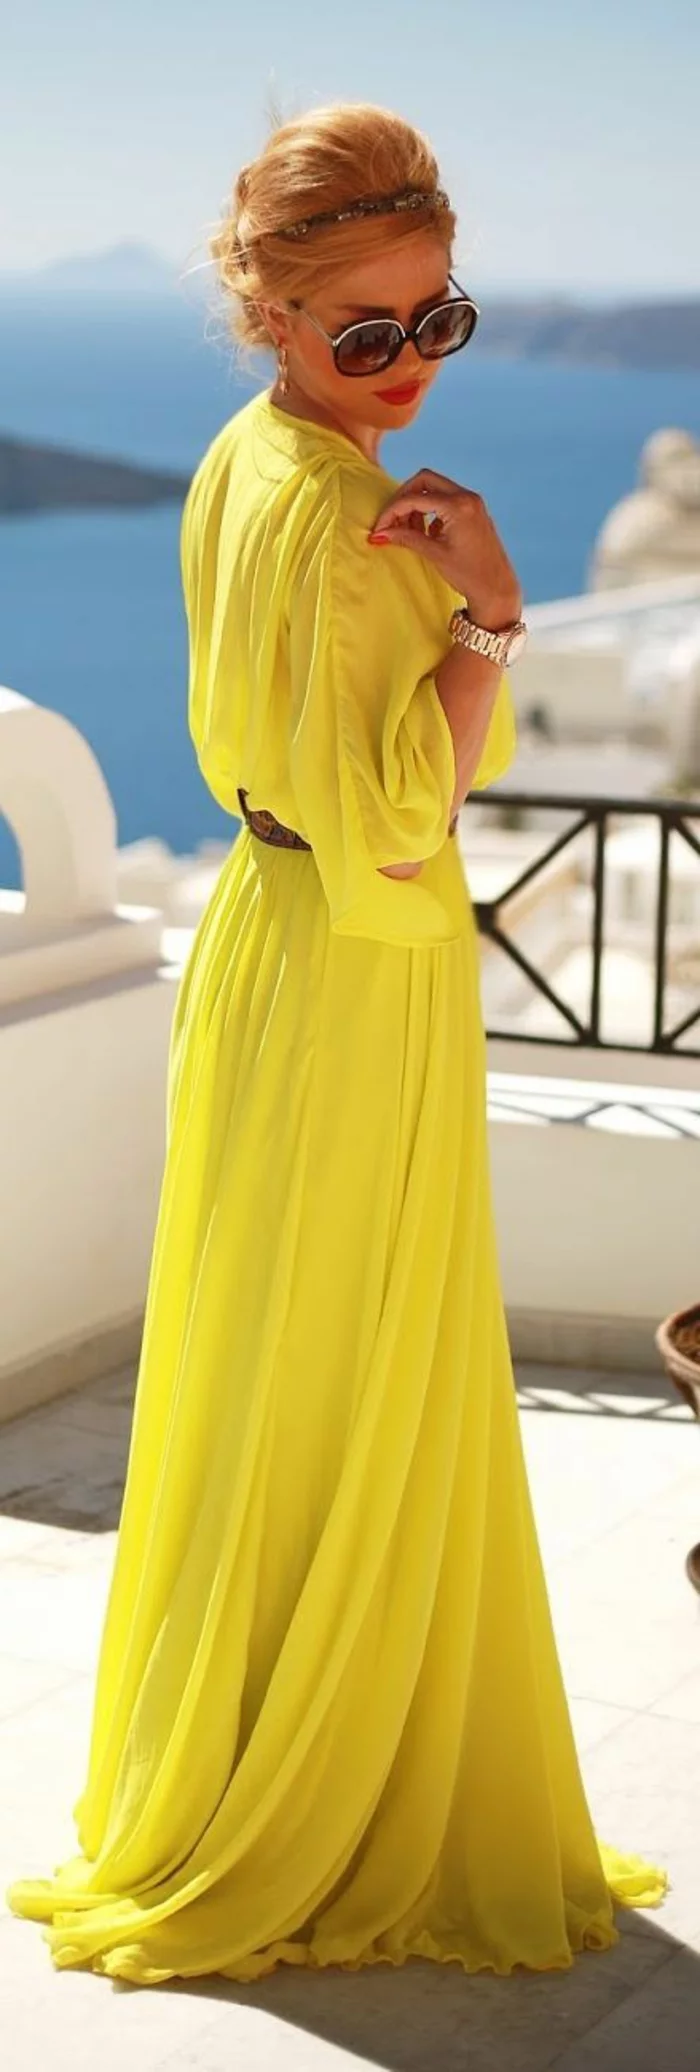 kleid gelb lang frauen modetrends lifestyle